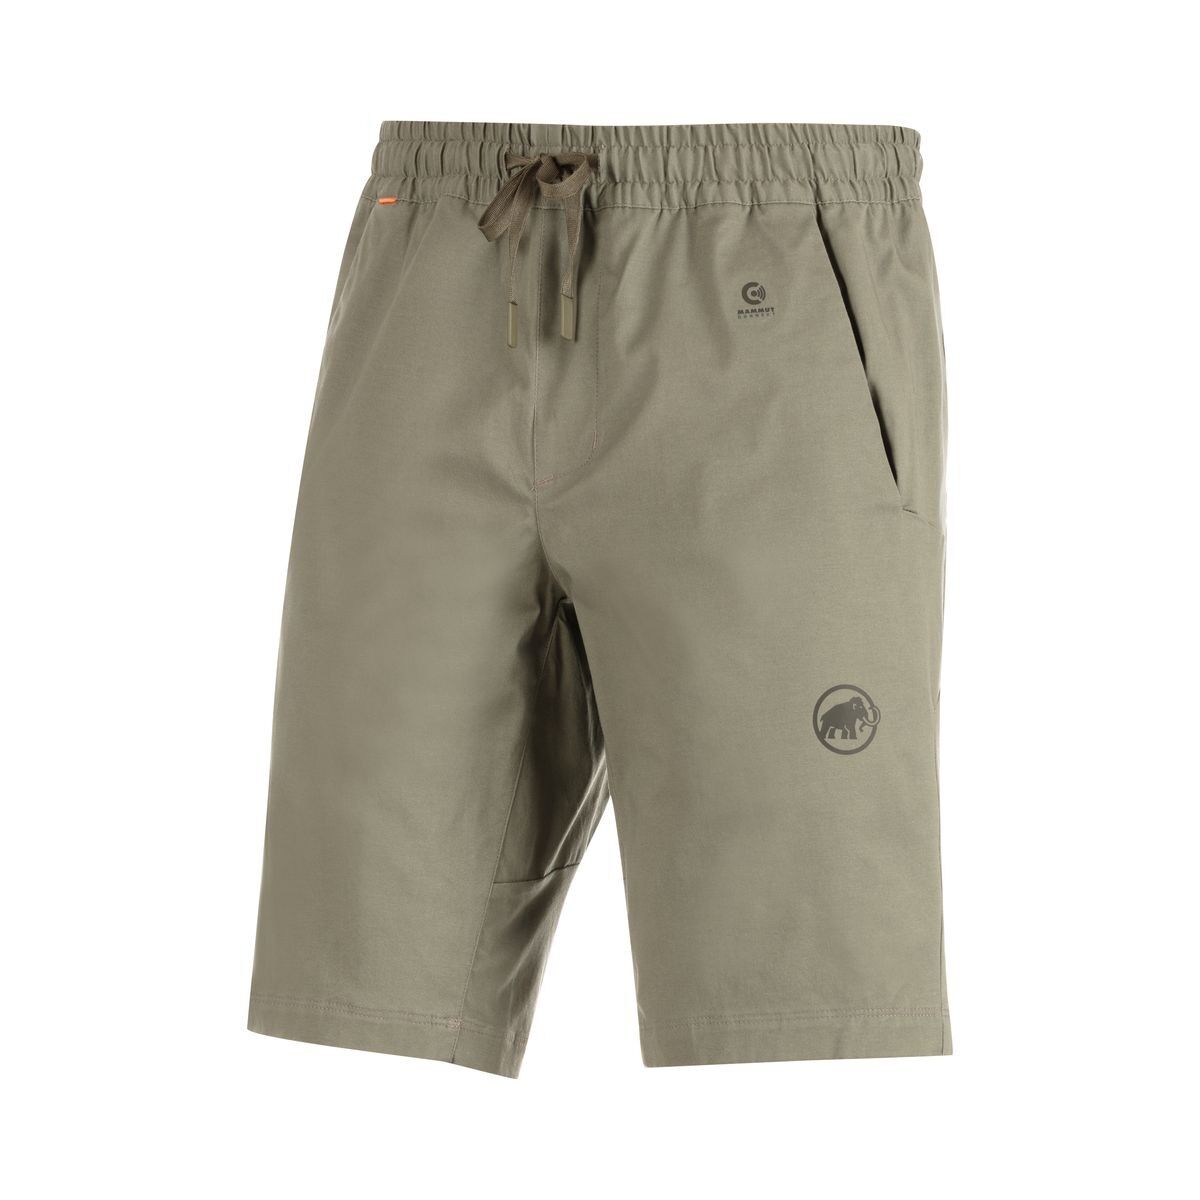 Mammut Camie Shorts - Pantalónes cortos de escalada - Hombre